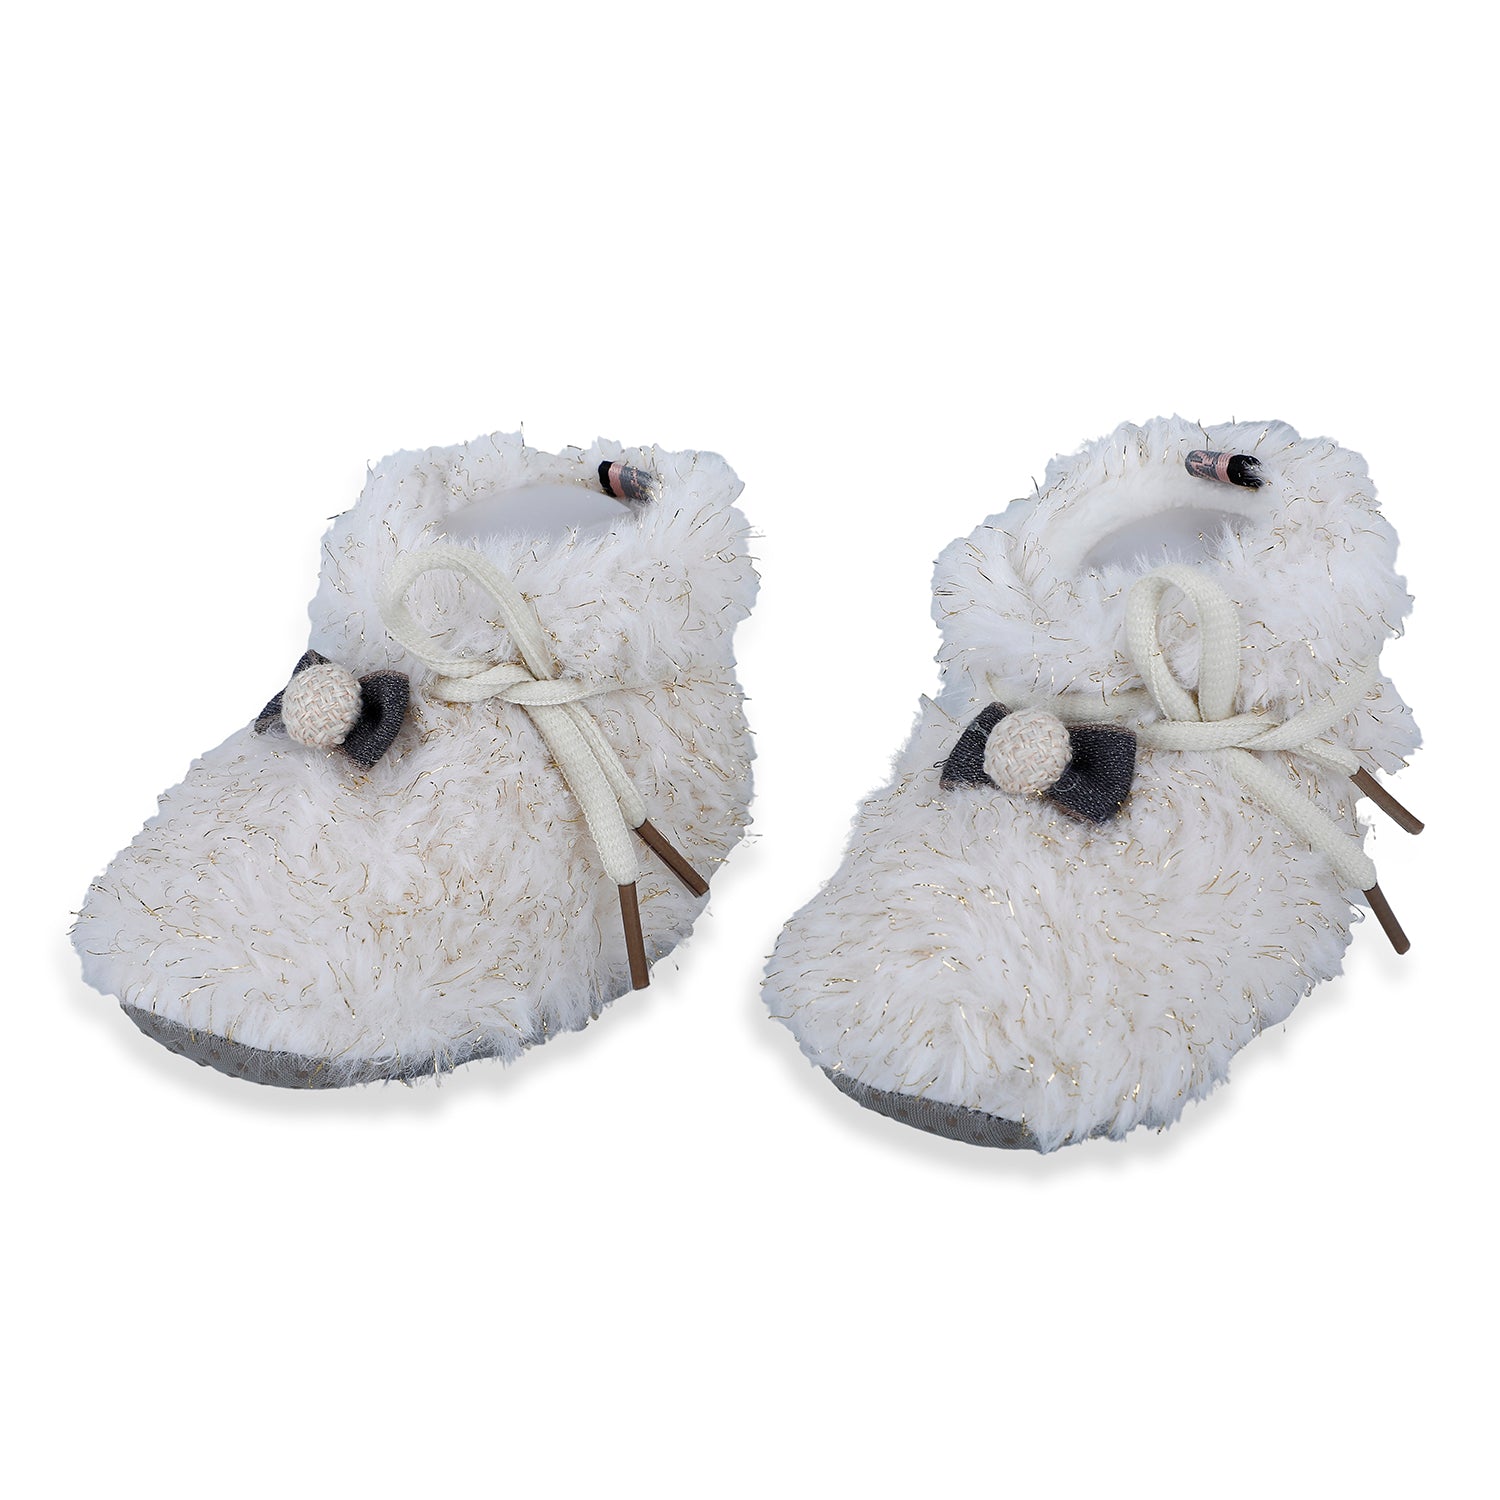 Baby Moo Papa's Angel Velcro Warm Furry Booties - Cream - Baby Moo